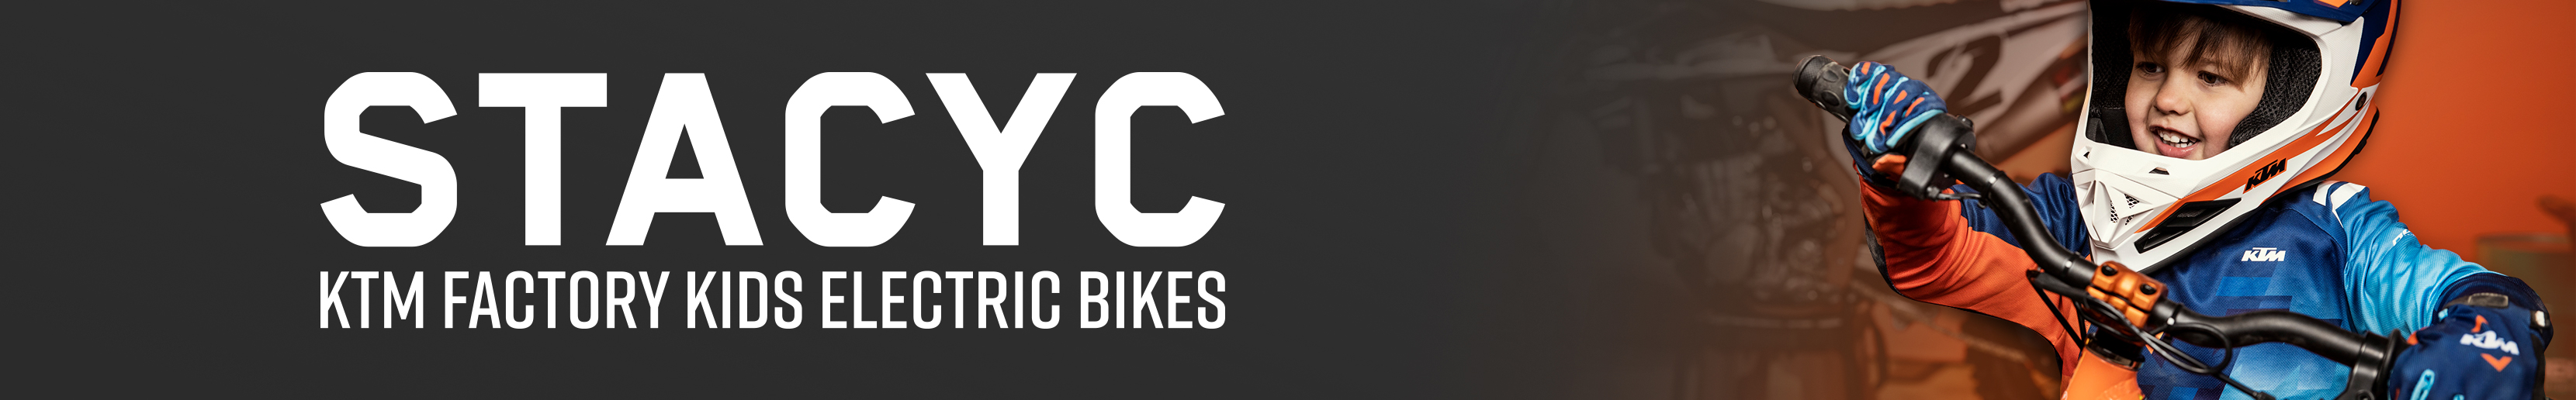 stacyc-category-banner.jpg